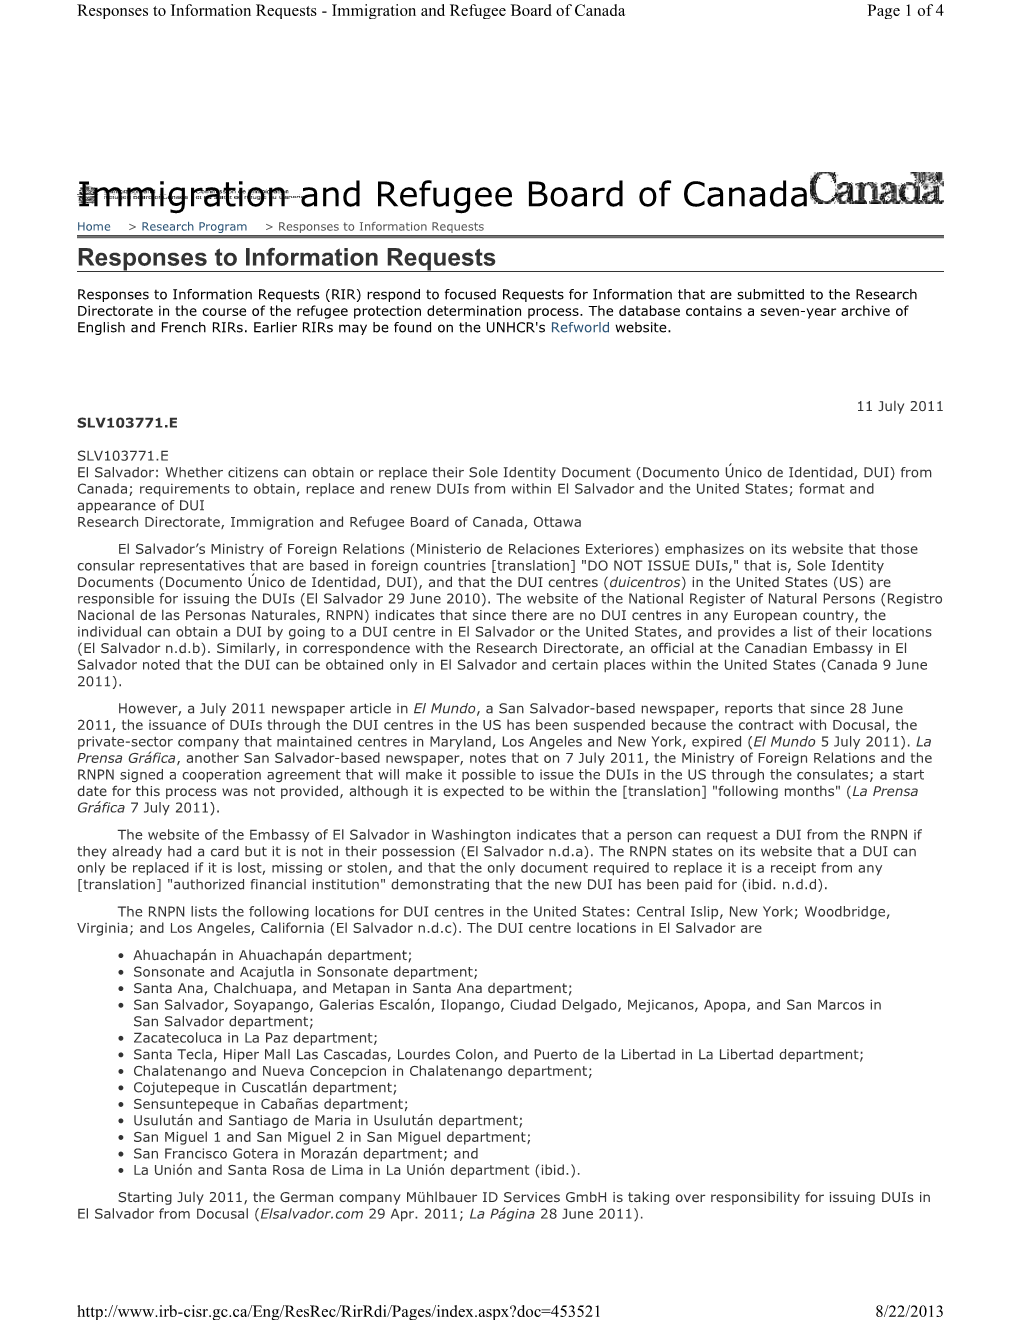 (Documento Único De Identidad, DUI) from Canada